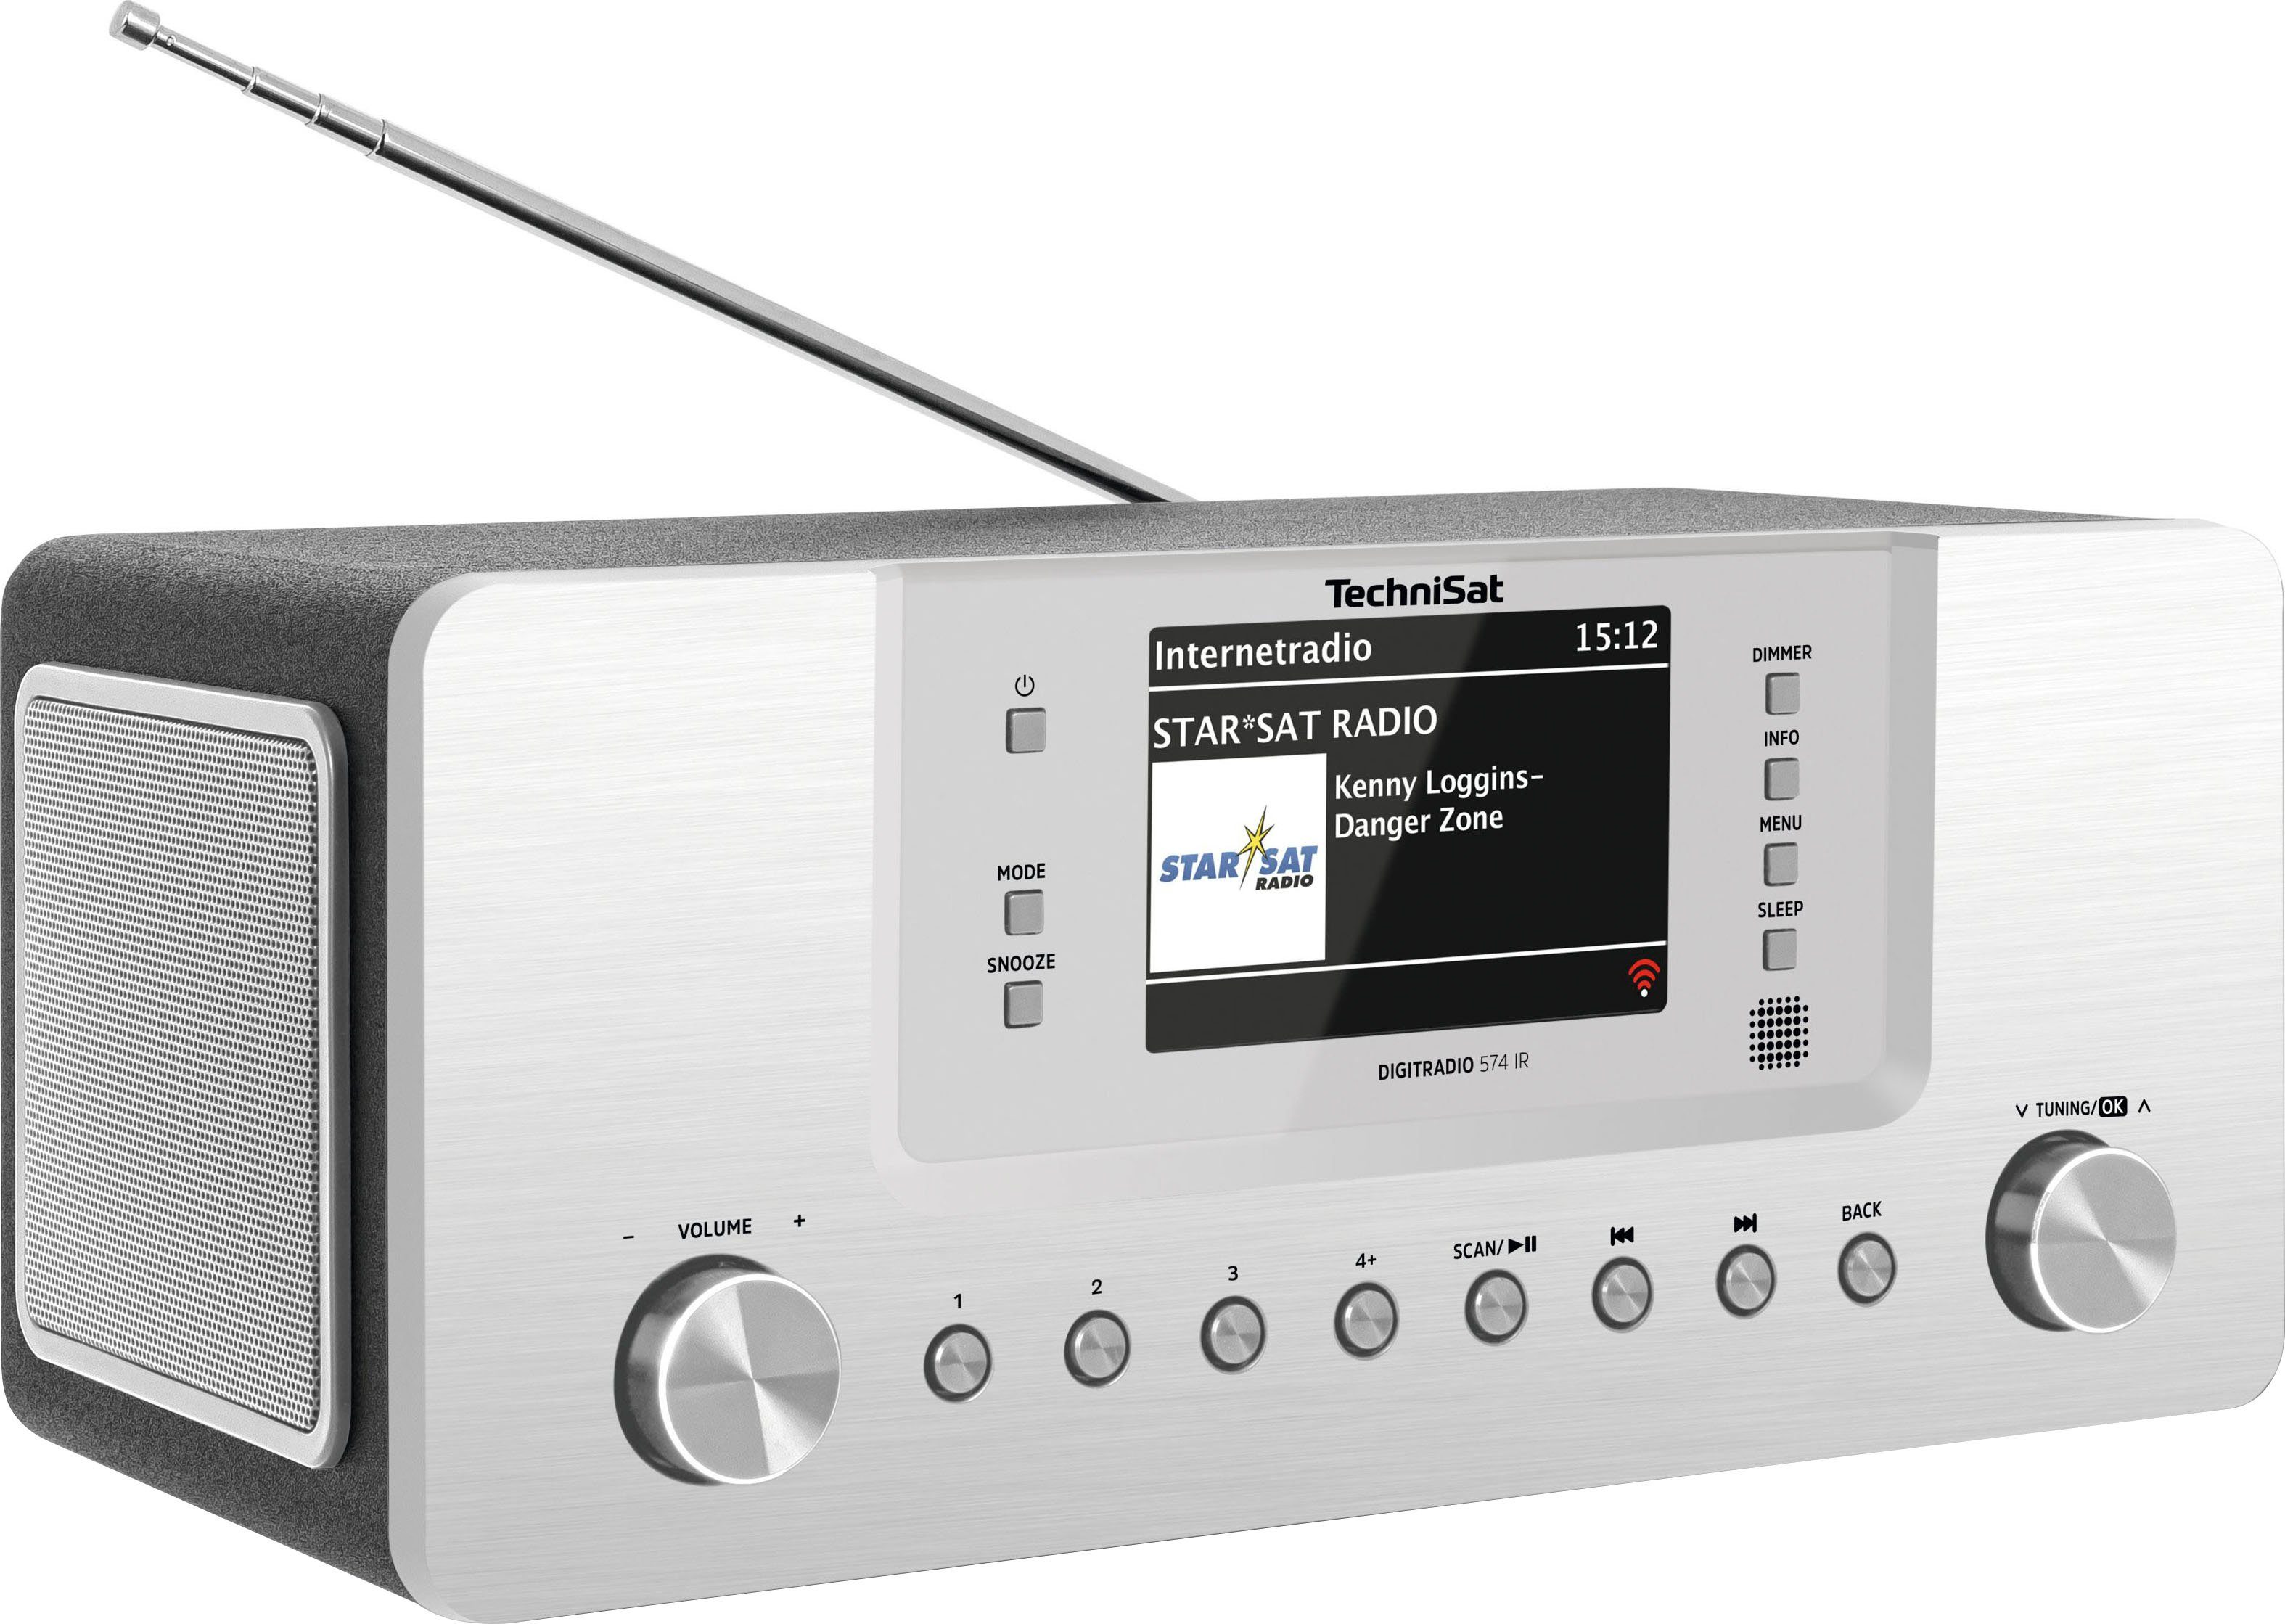 TechniSat DIGITRADIO 574 IR Radio (Digitalradio (DAB), Internetradio, UKW mit RDS, 10 W) | Radios